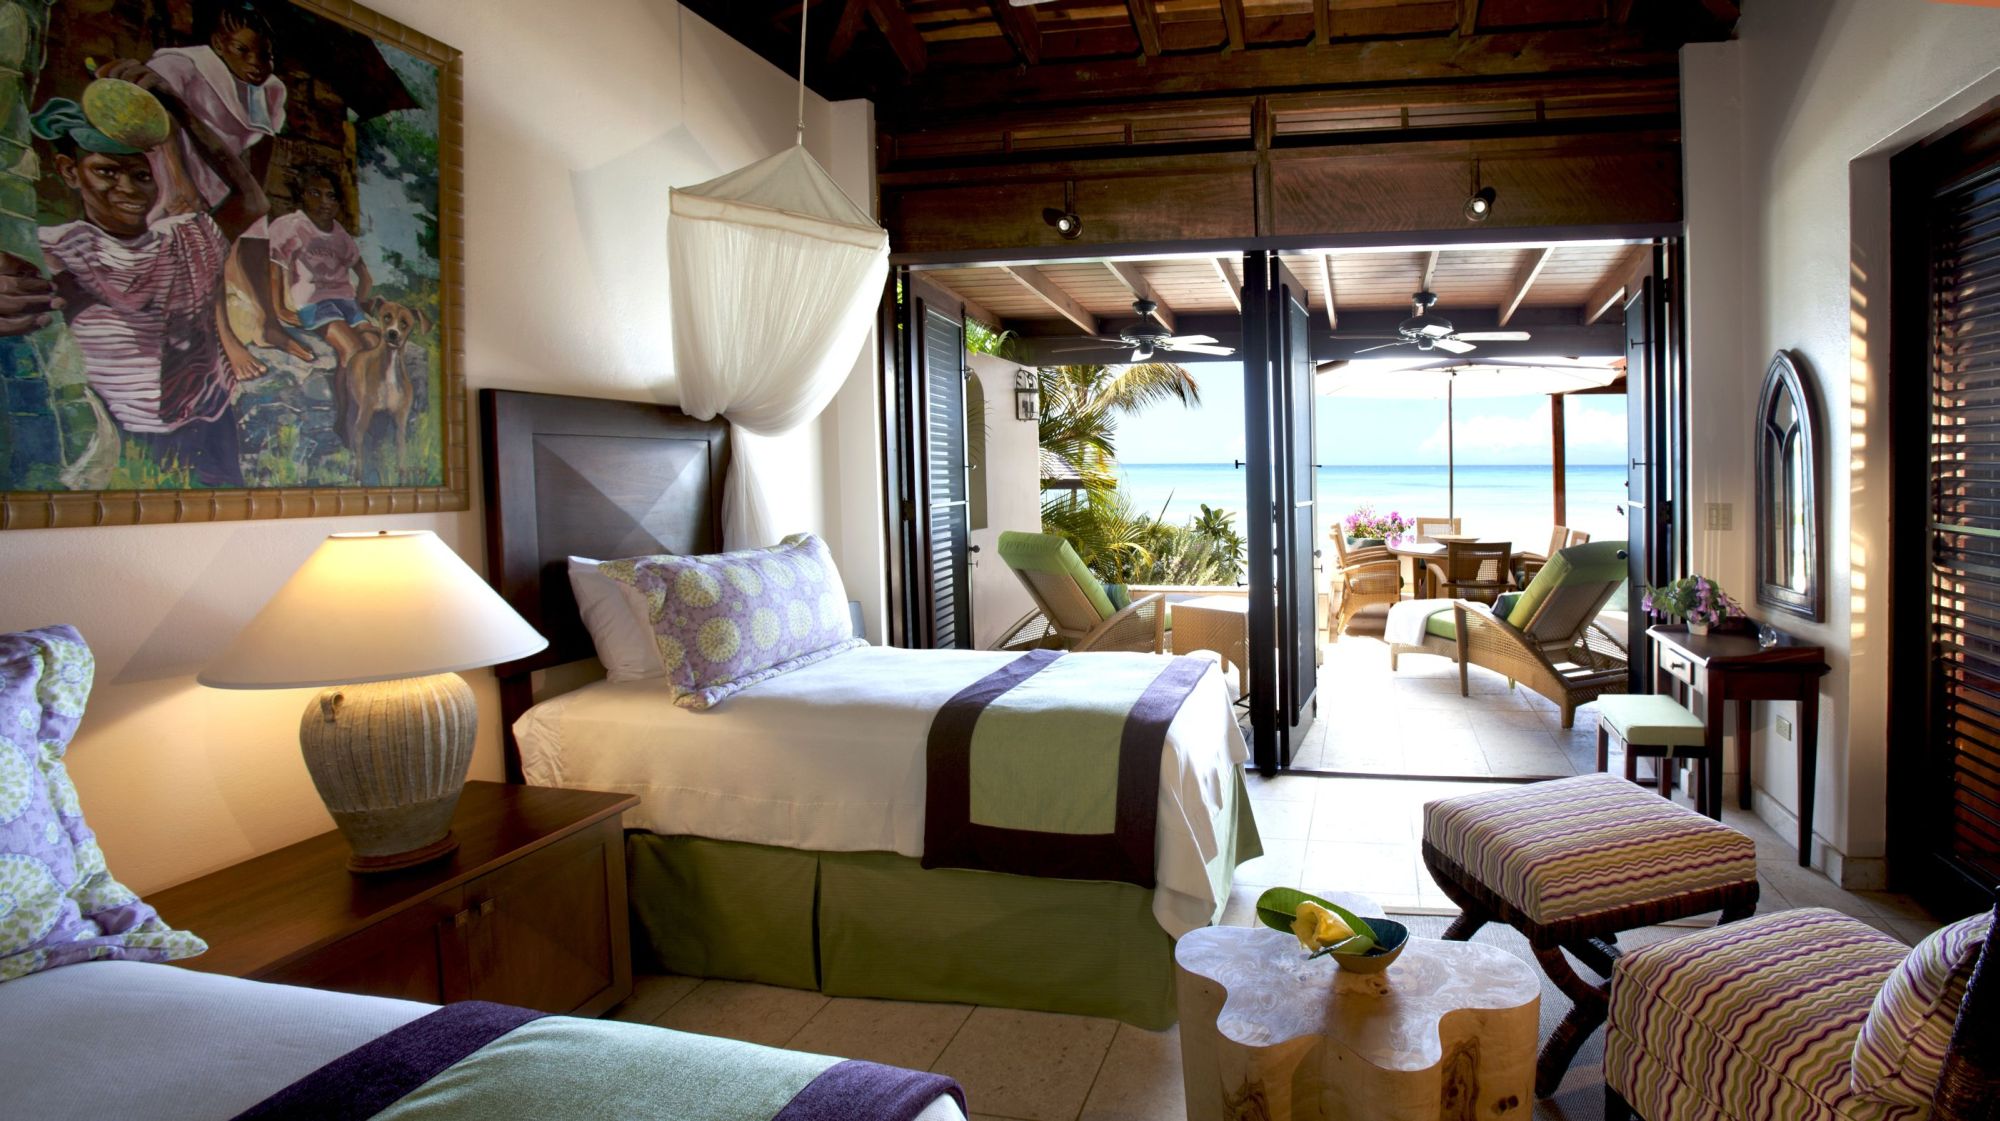 Double bedroom at Hummingbird, Jumby Bay, Antigua